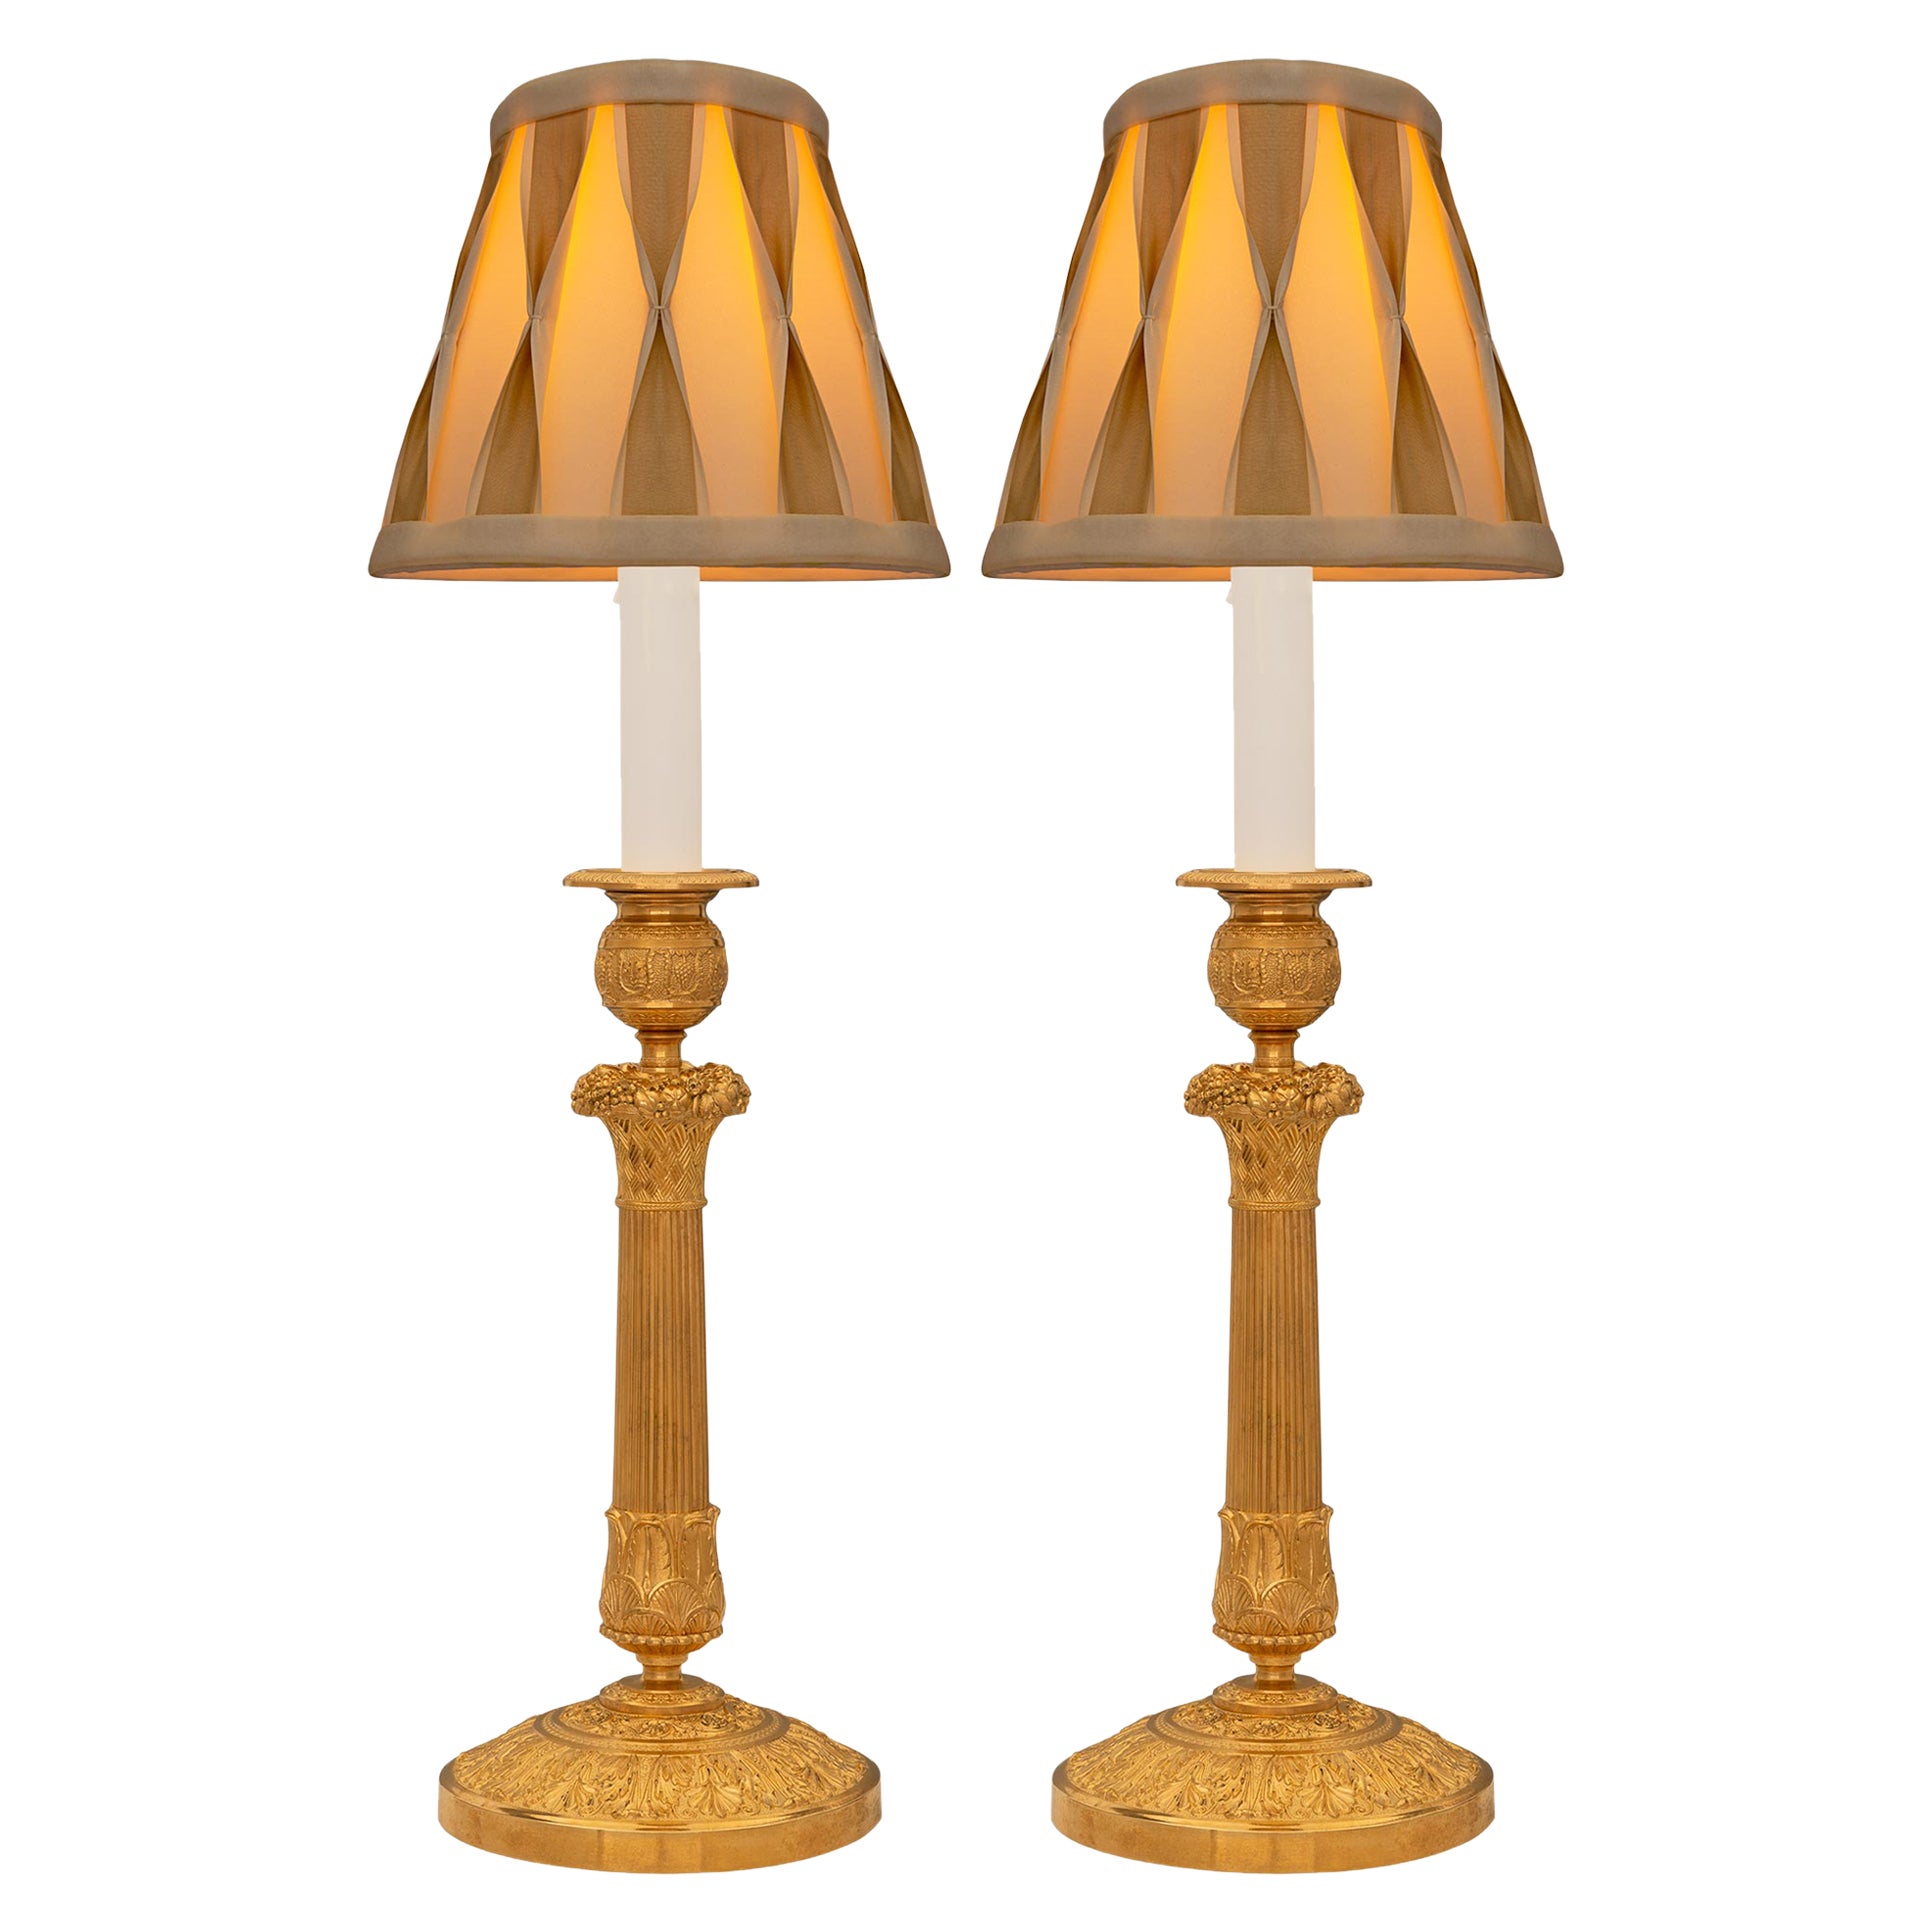 French 19th Century Louis XVI St. Belle Époque Period Ormolu Candlestick Lamps For Sale